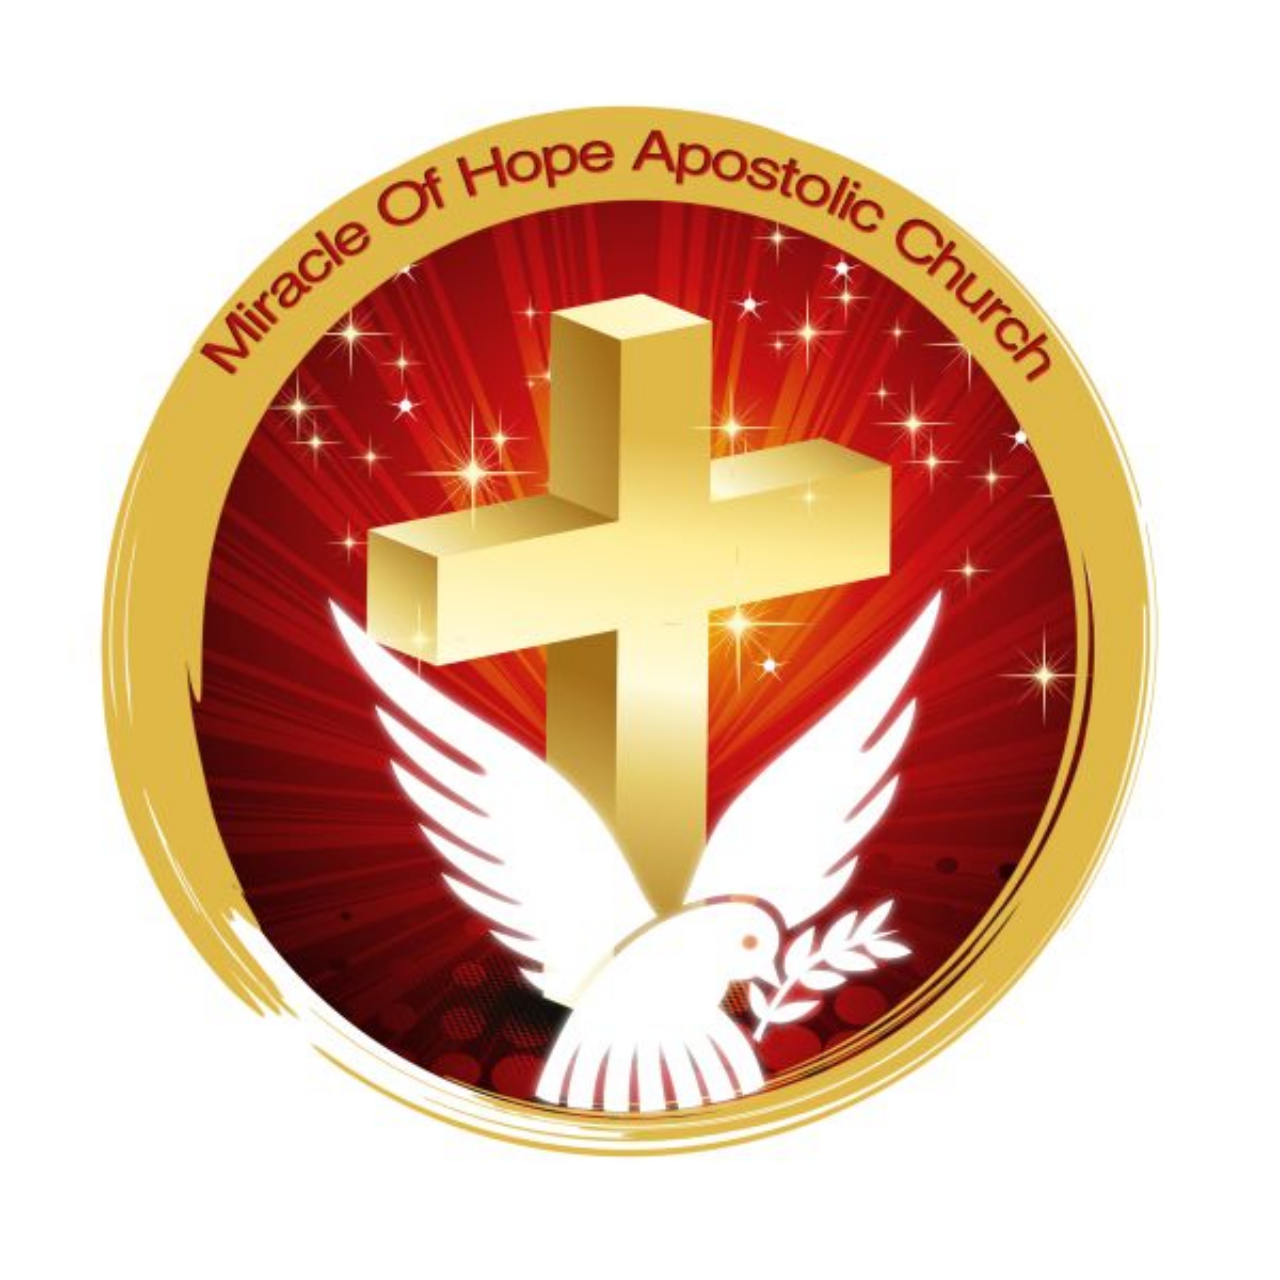 Miracle Of Hope Apostolic Church's web page